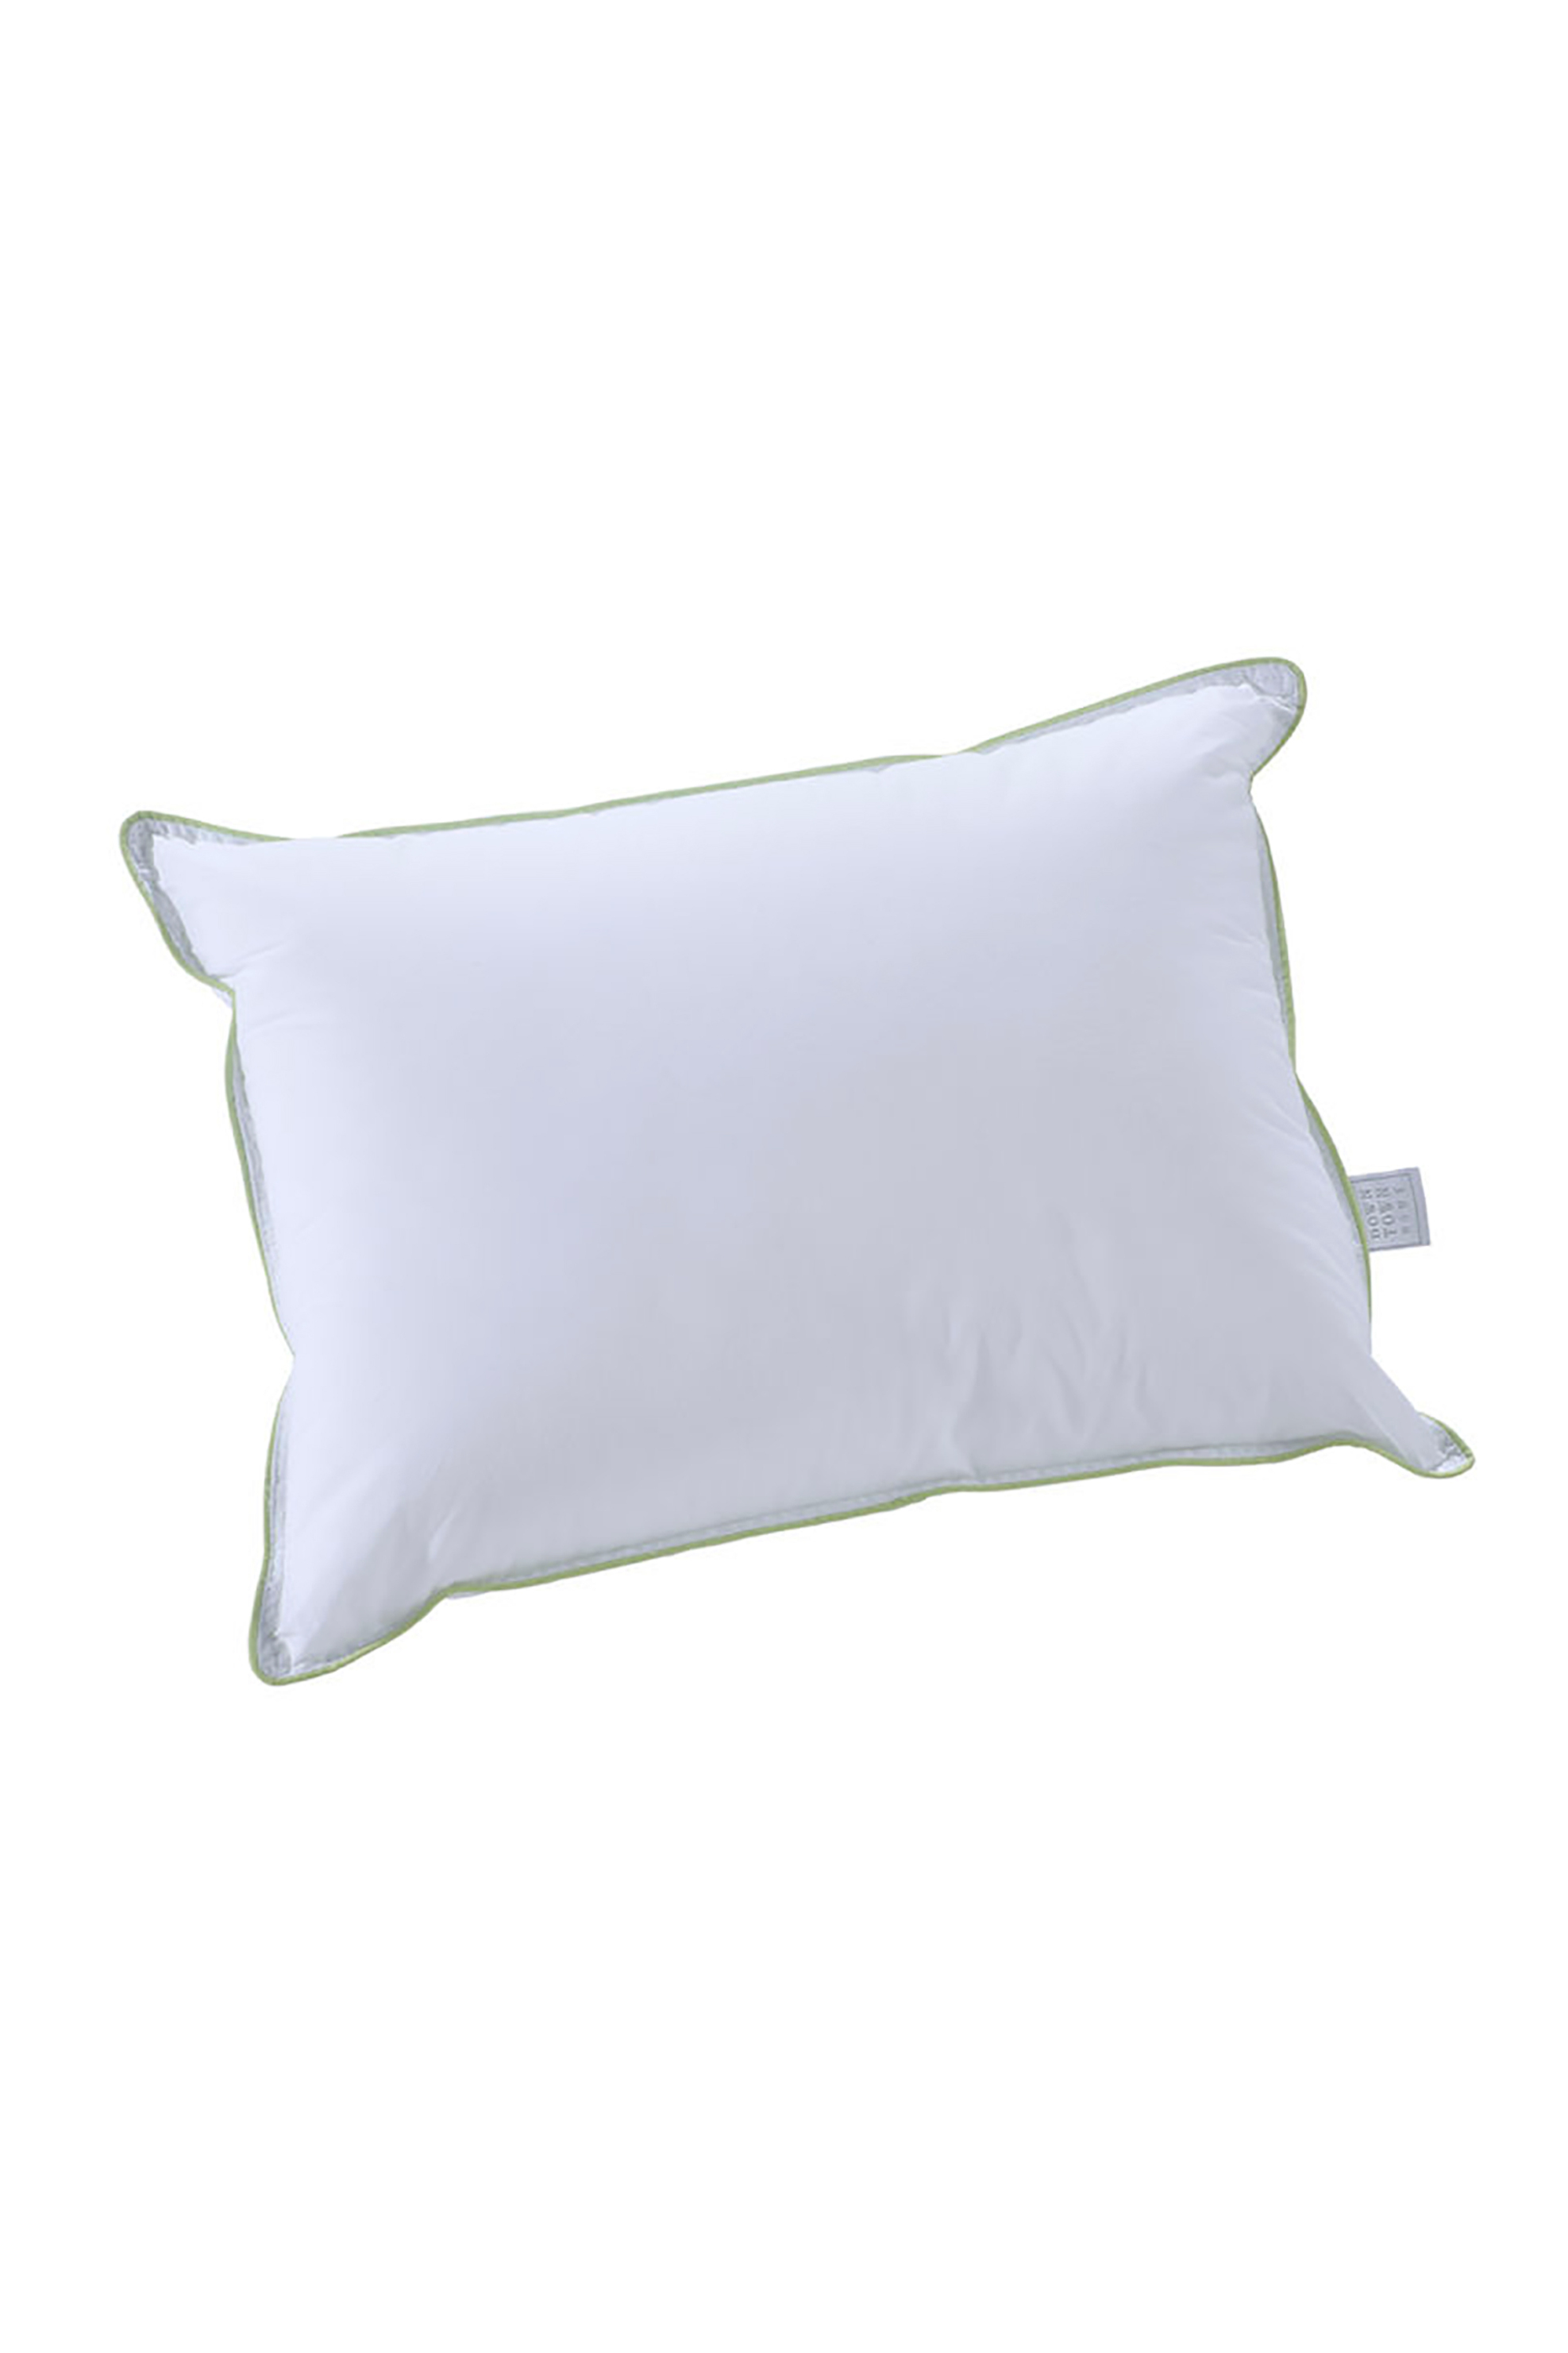 DOWN TOWN Home βρεφικό μαξιλάρι ύπνου "New Microfiber" 34 x 45 cm - 19-0085 2-7006005463